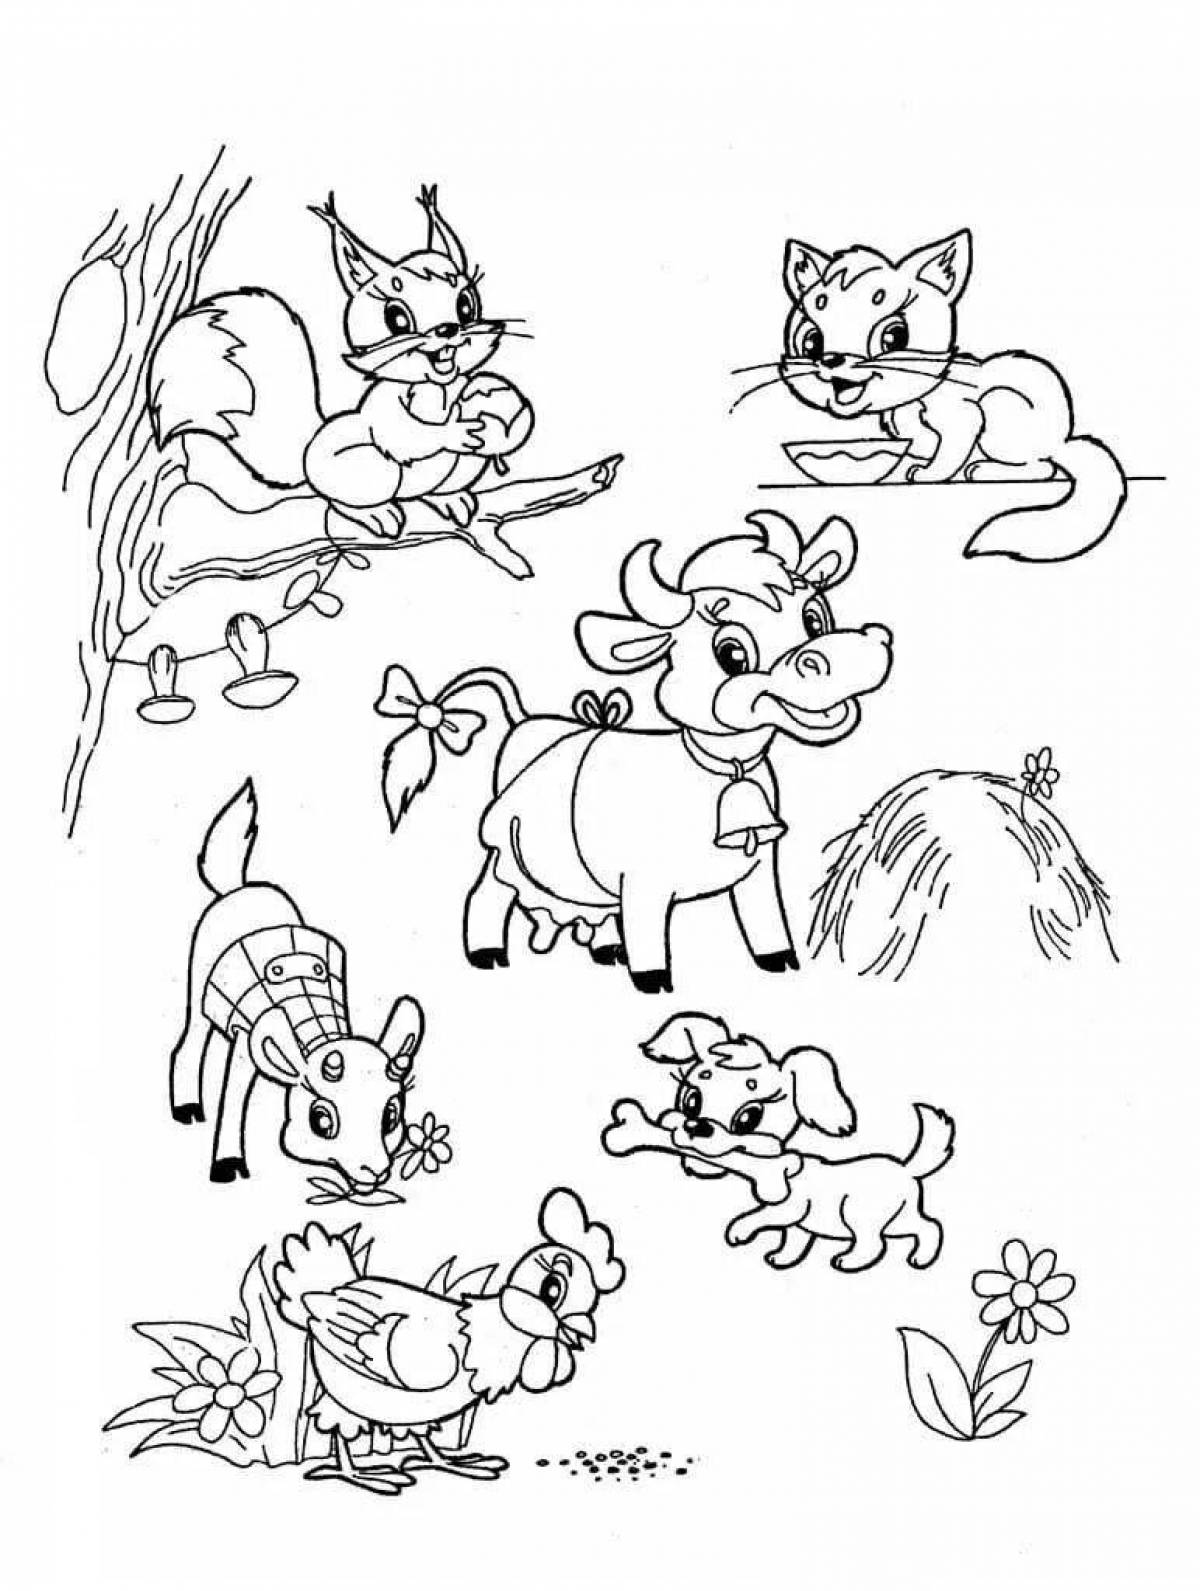 Adorable pet coloring page